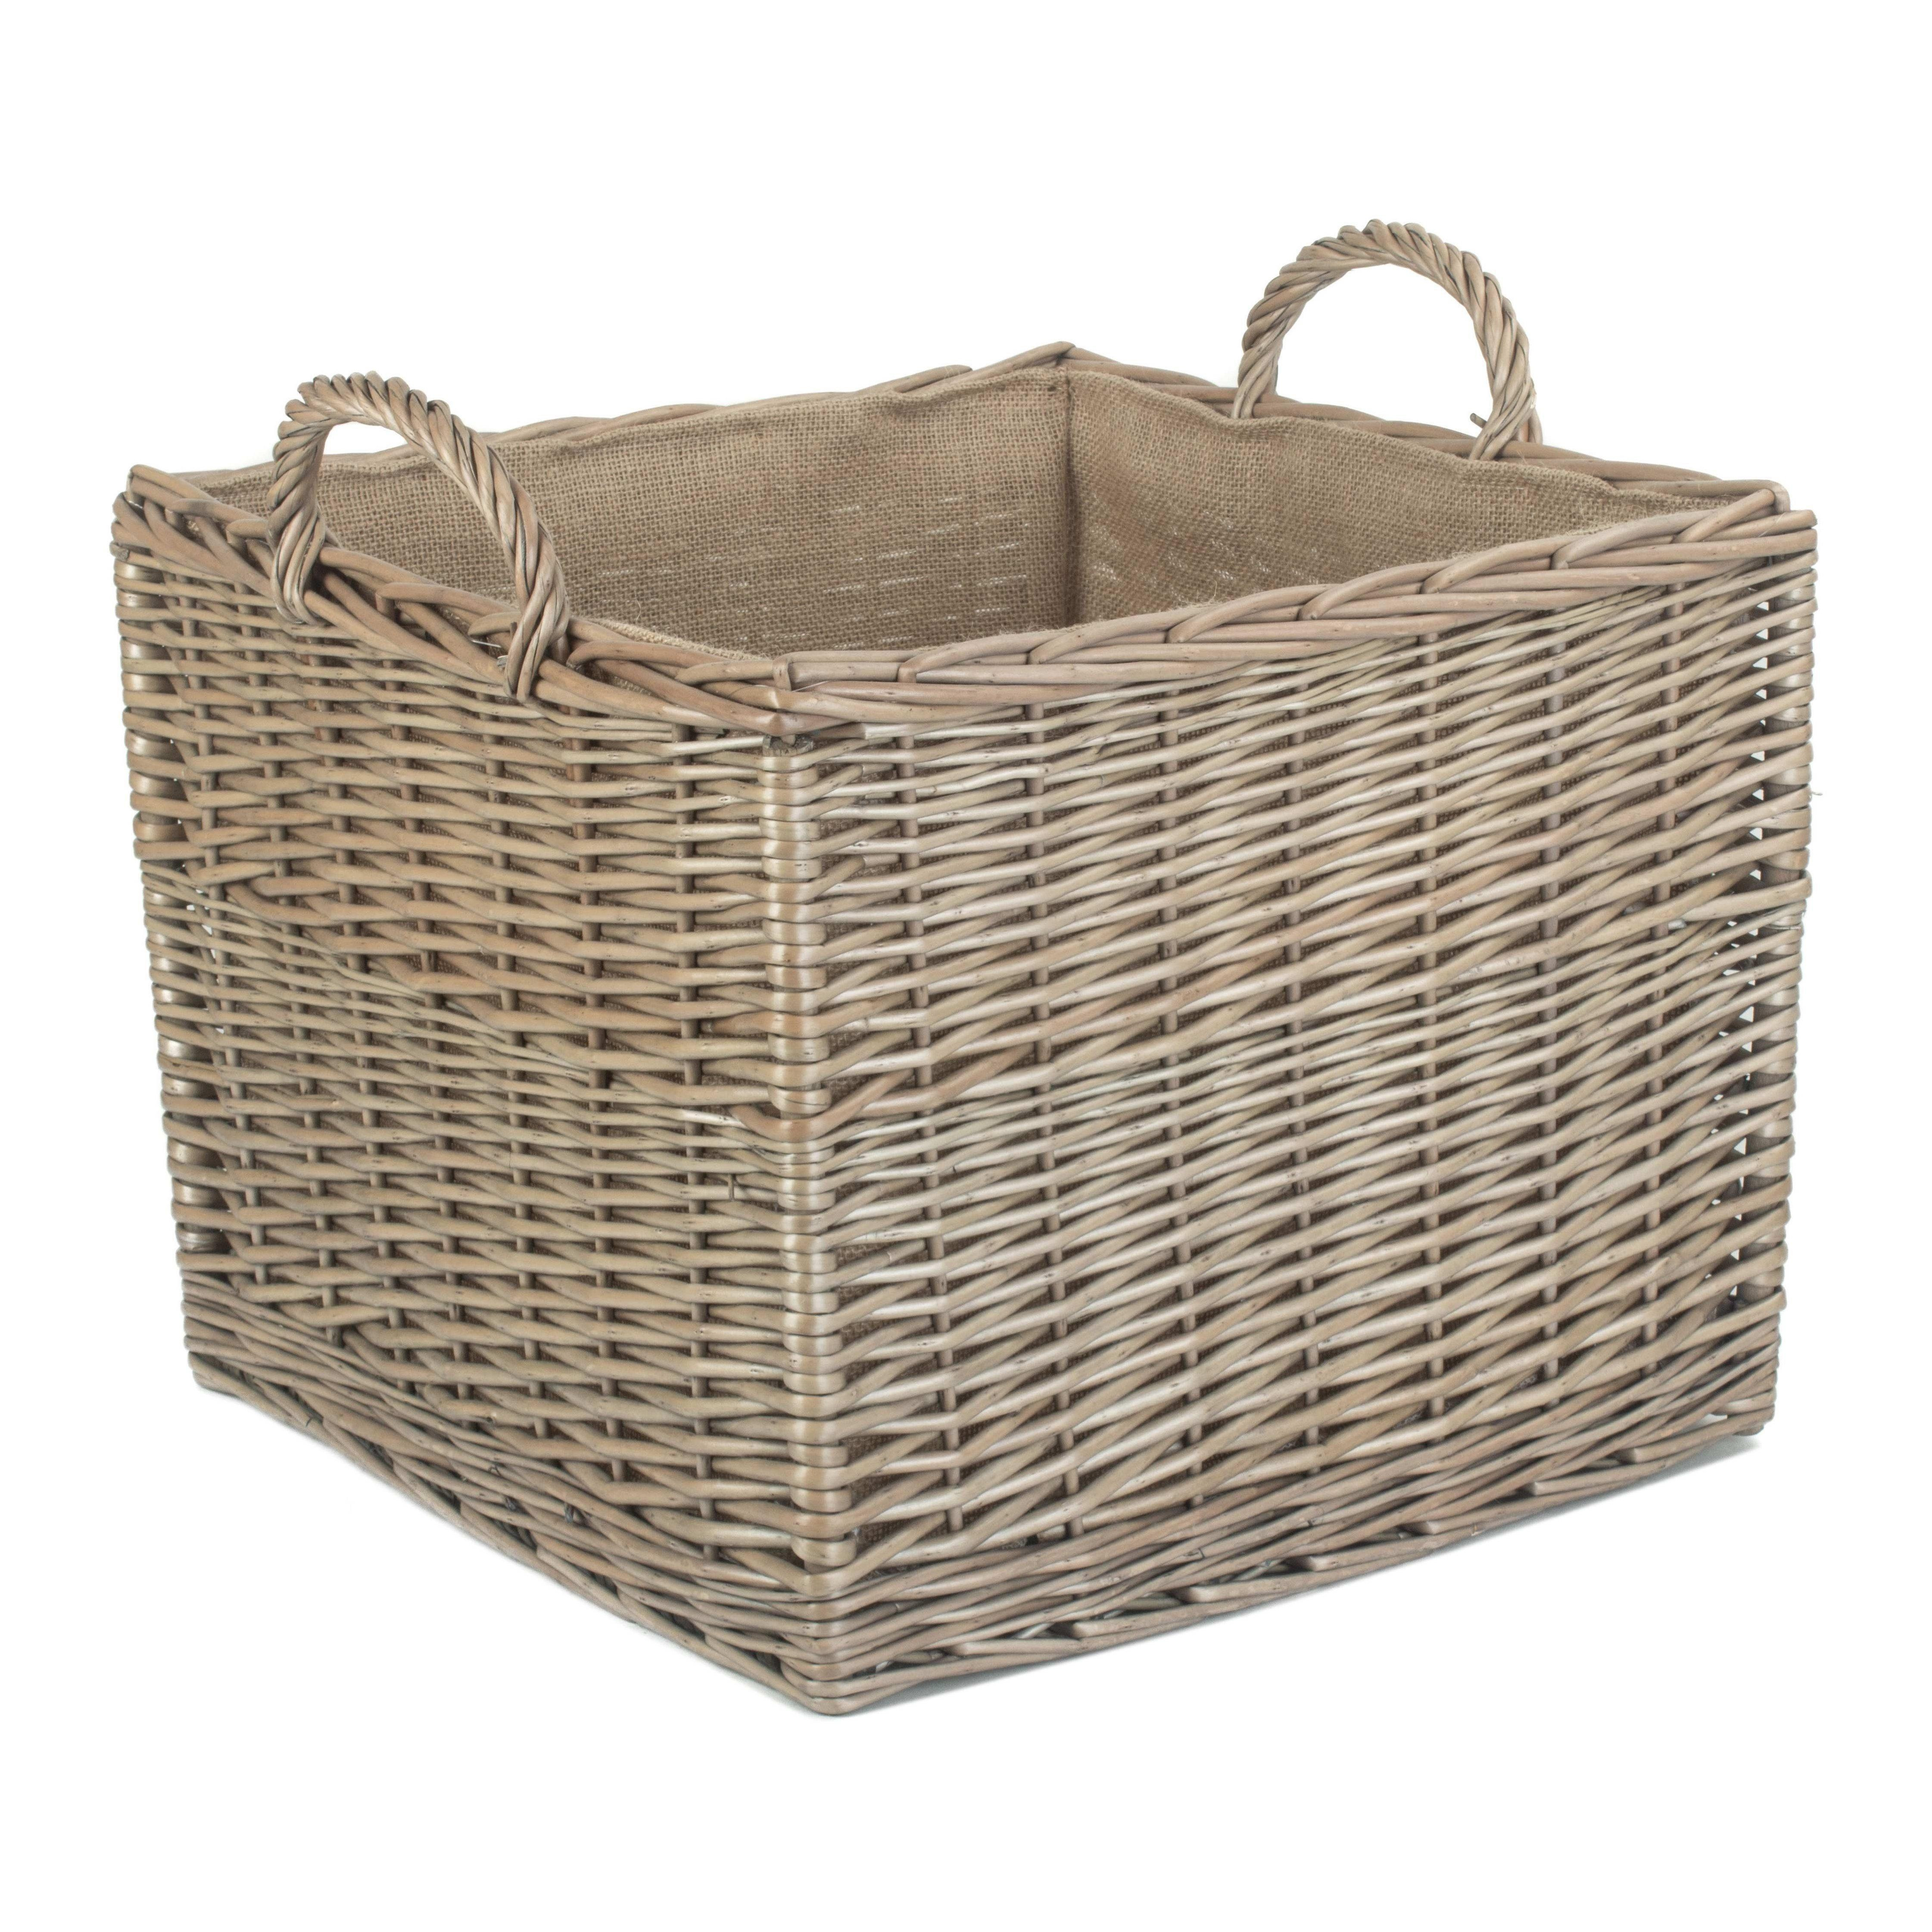 Wicker Antique Wash Square Hessian Lined Log Basket - image 1